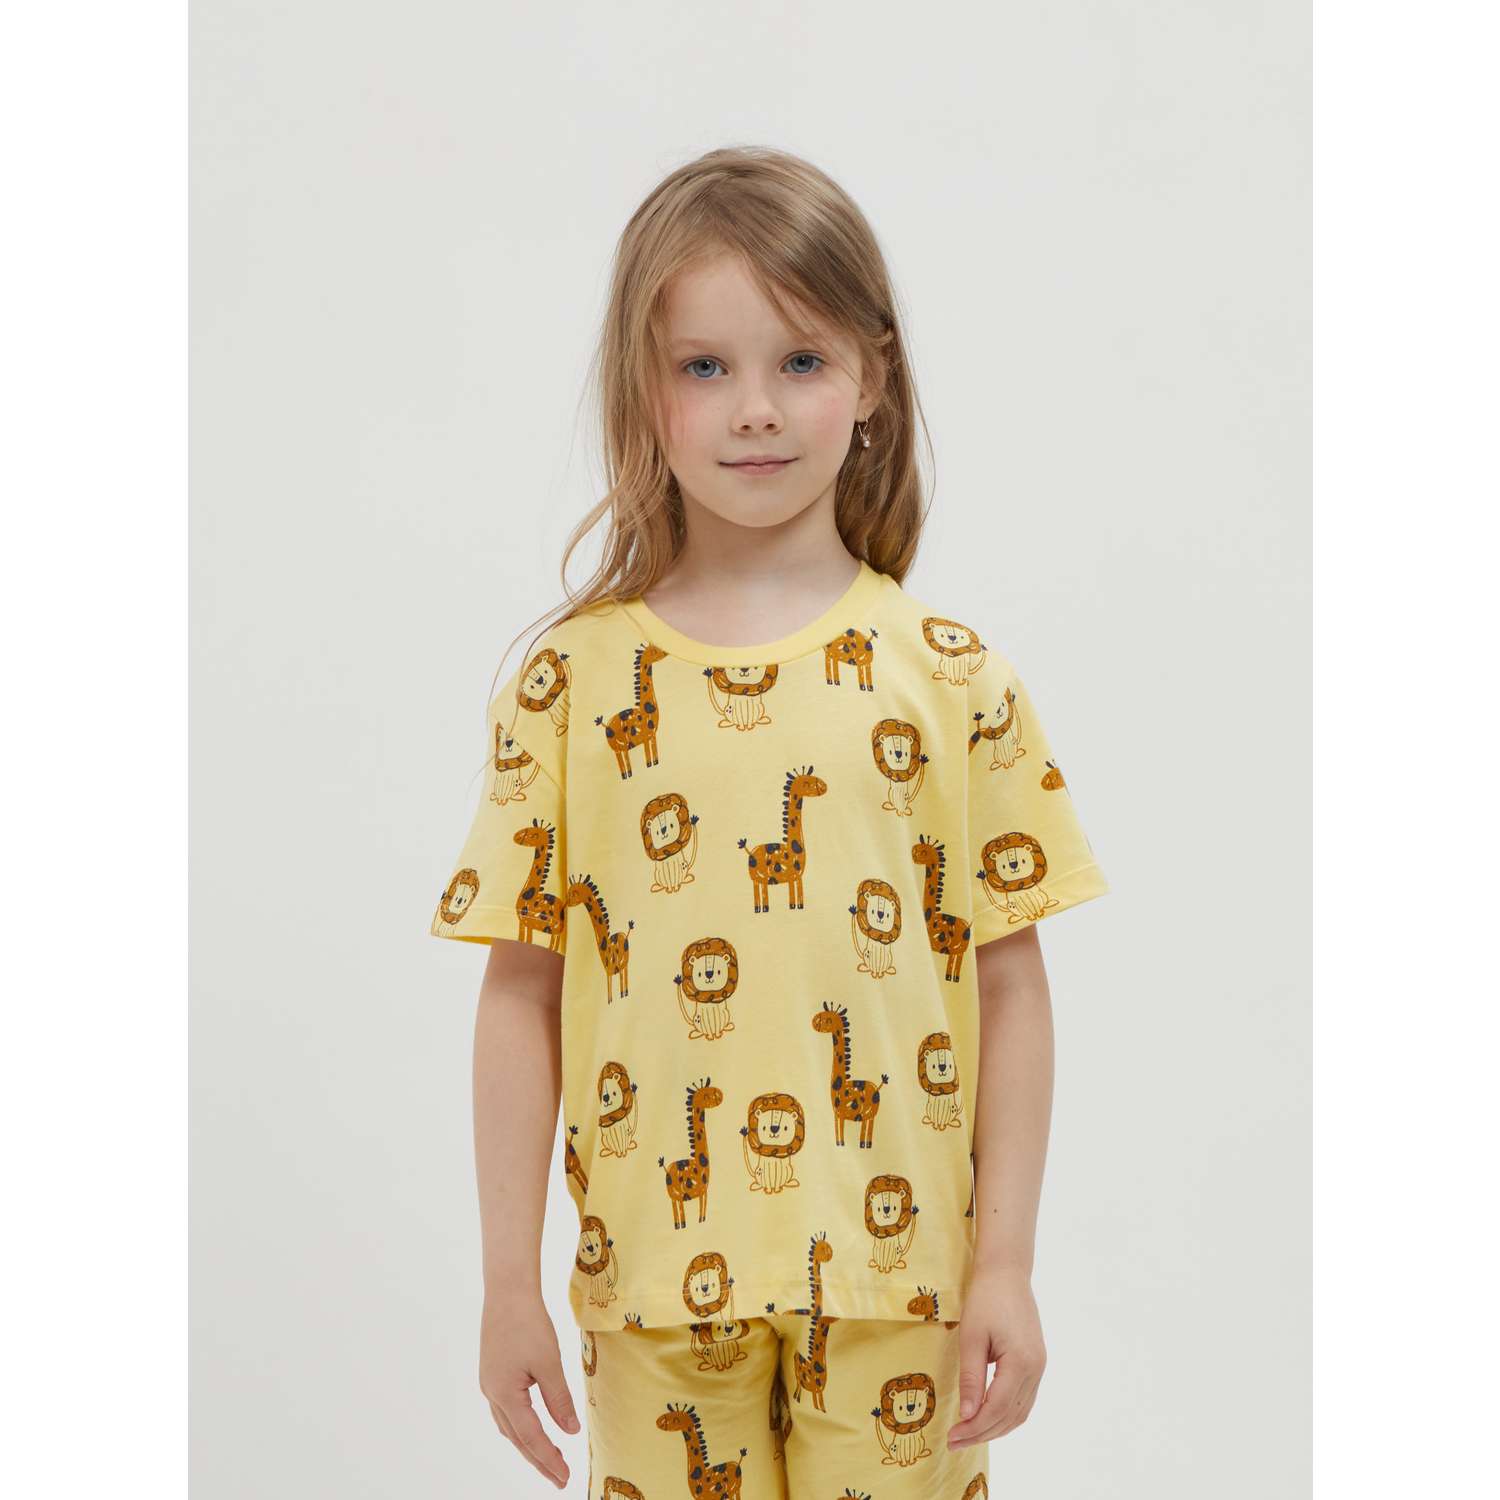 Пижама ISSHOP пижама желтая с шортами - фото 3